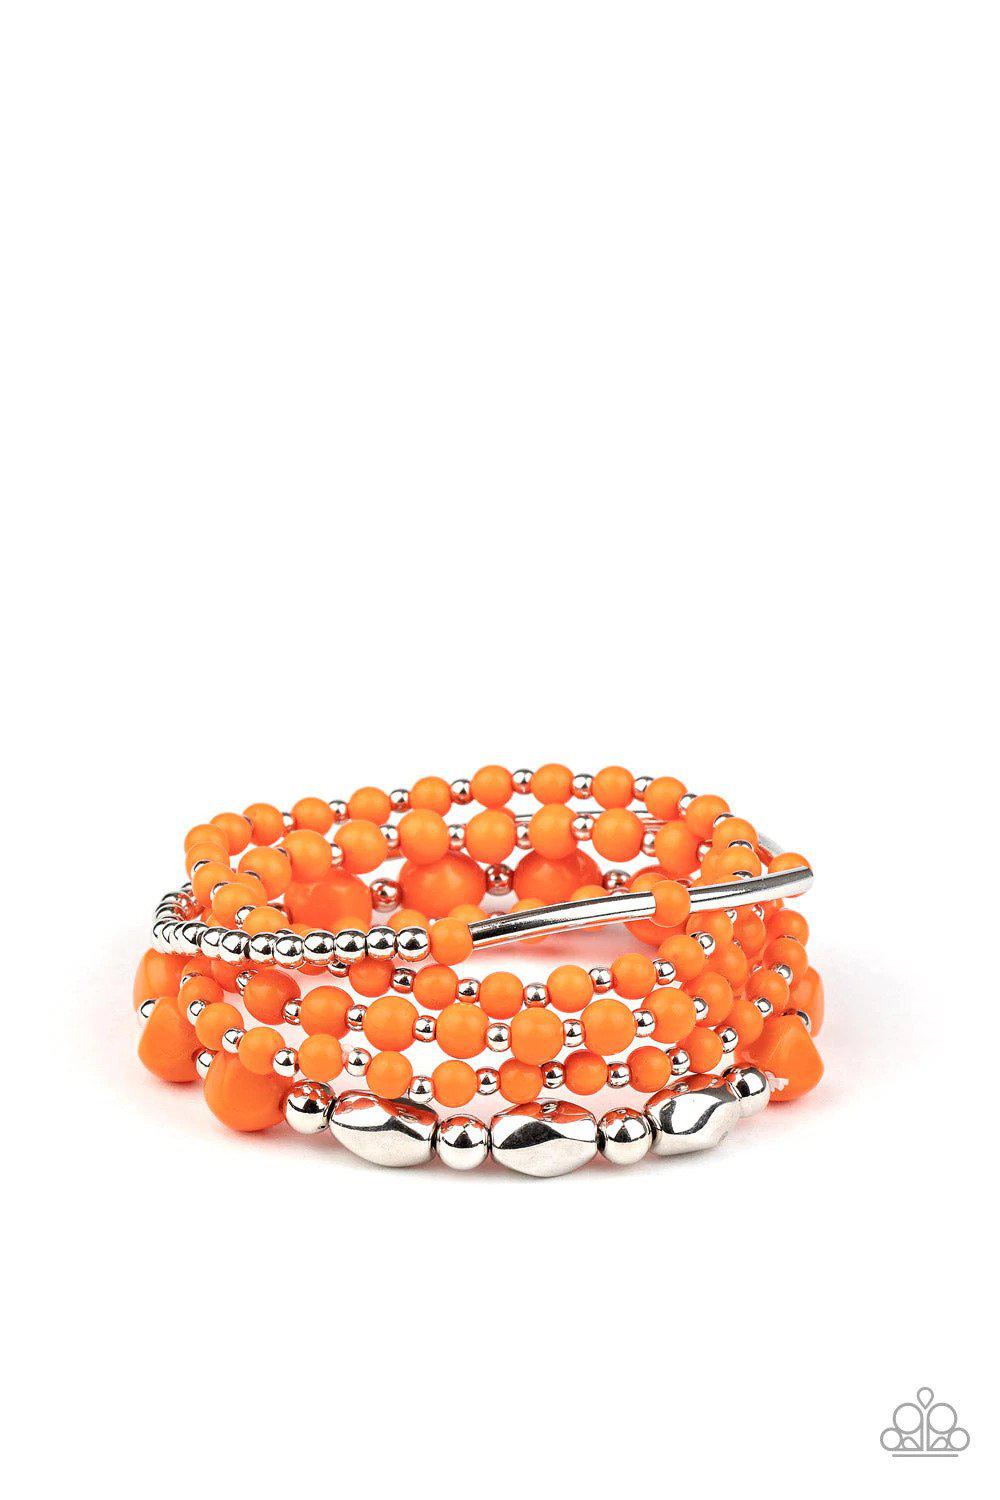 Vibrantly Vintage Orange Bracelet - Paparazzi Accessories- lightbox - CarasShop.com - $5 Jewelry by Cara Jewels